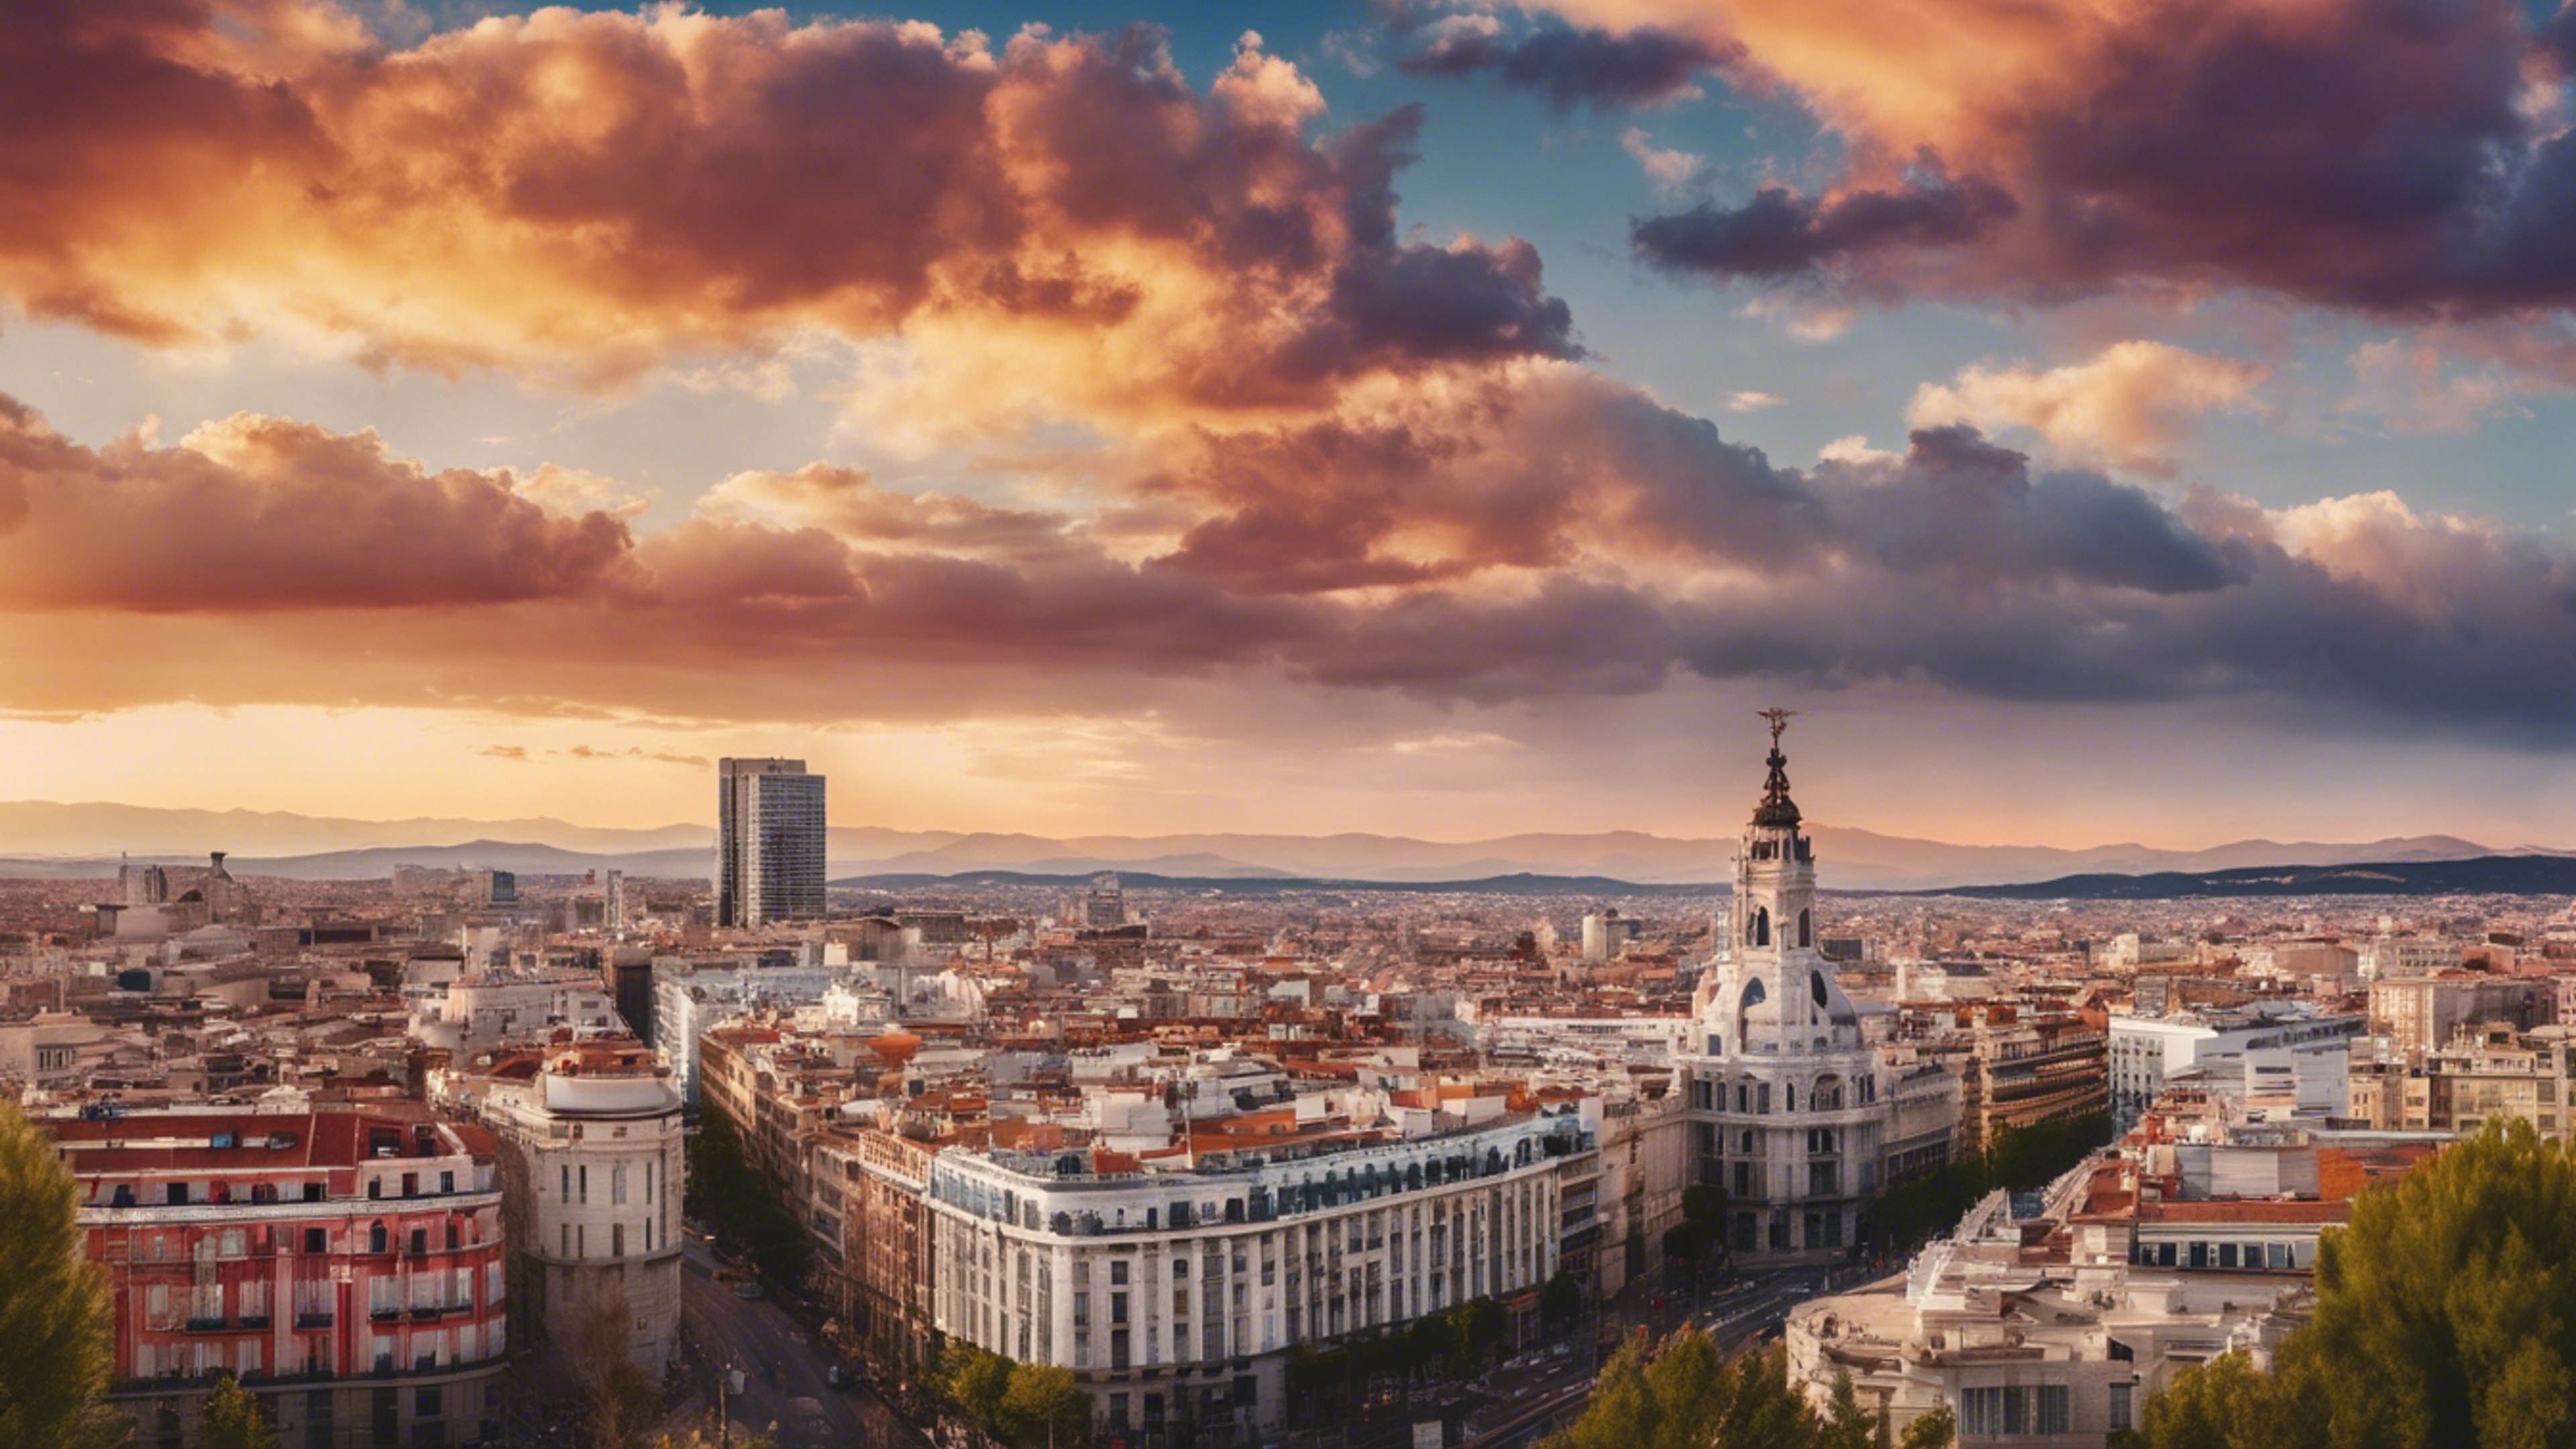 A breathtaking Madrid skyline set against a dramatic sunset sky.壁紙[d74f031fdeee4f459ec0]